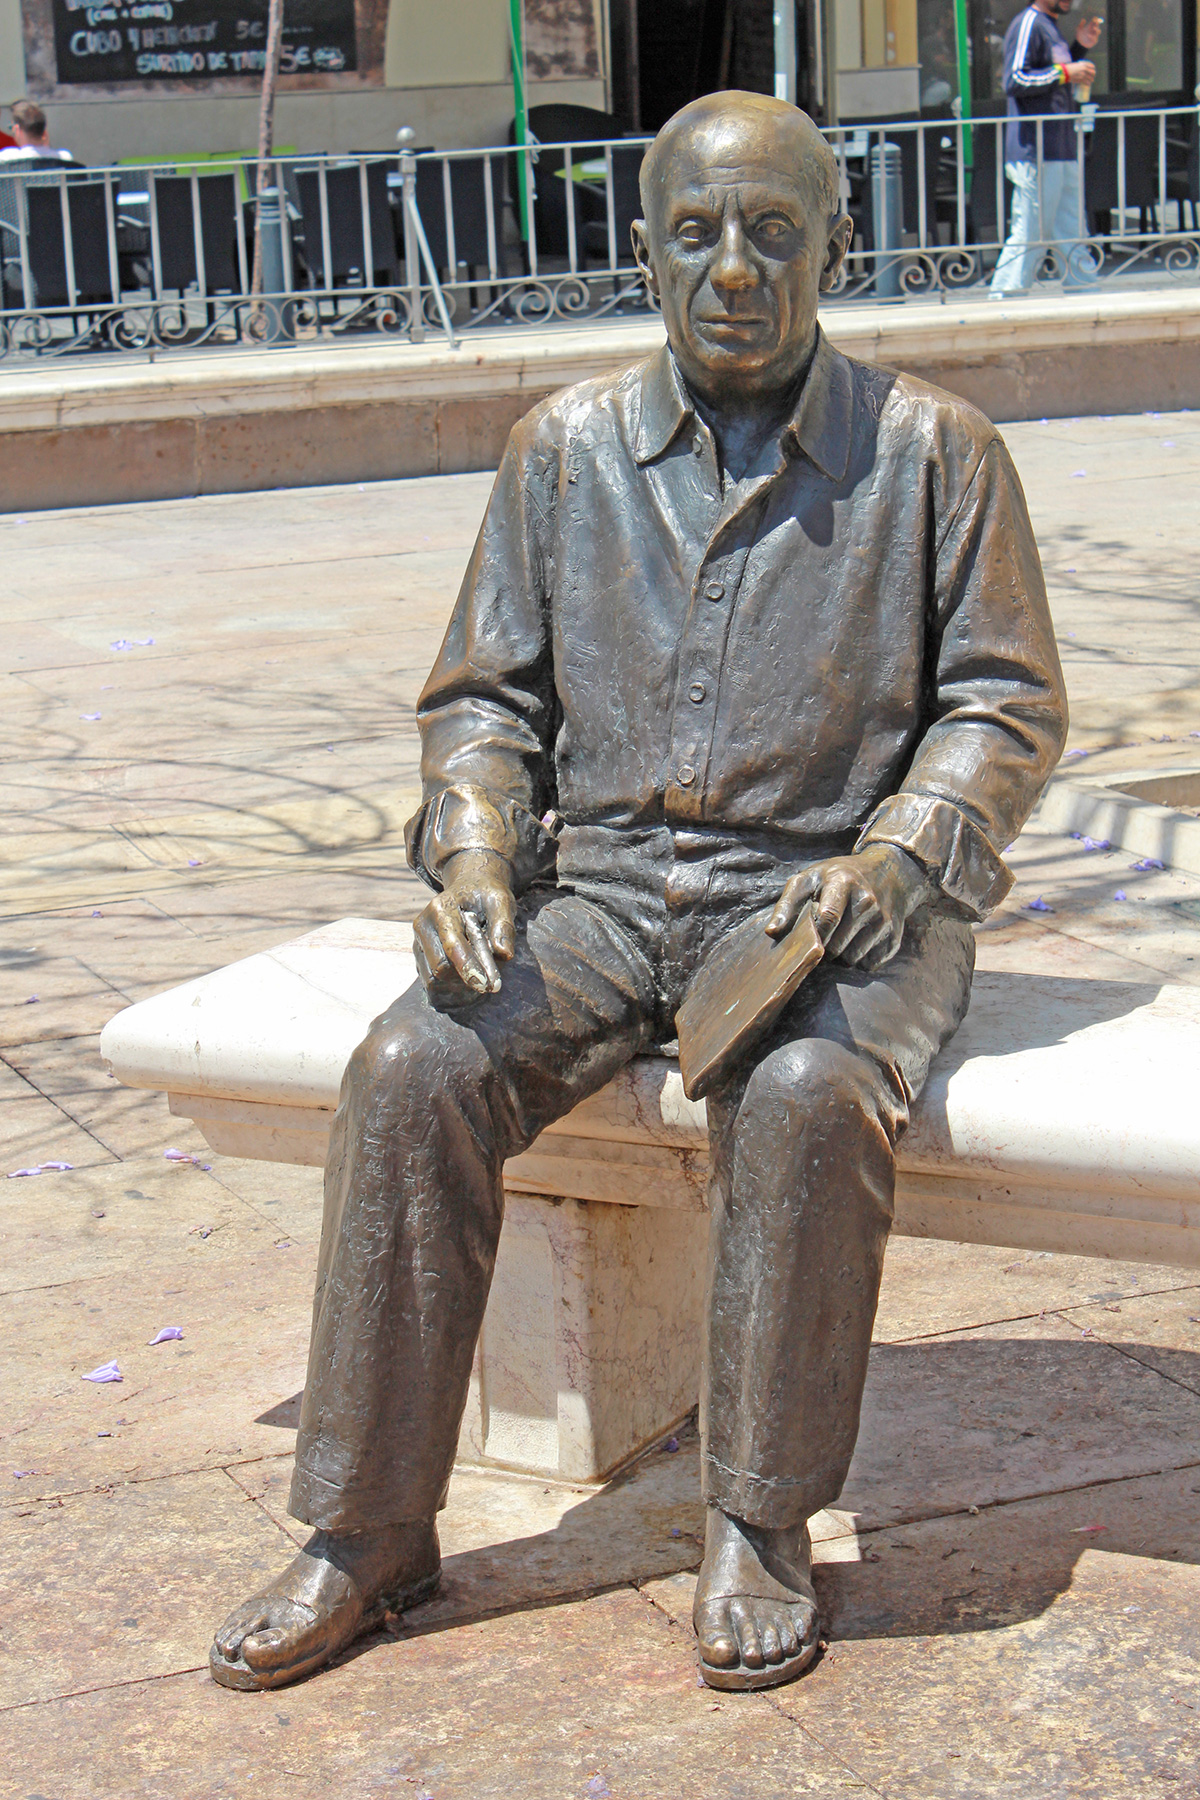 Life-size bronze statue of Pablo Picasso in Plaza de la Merced, adjacent to his family home